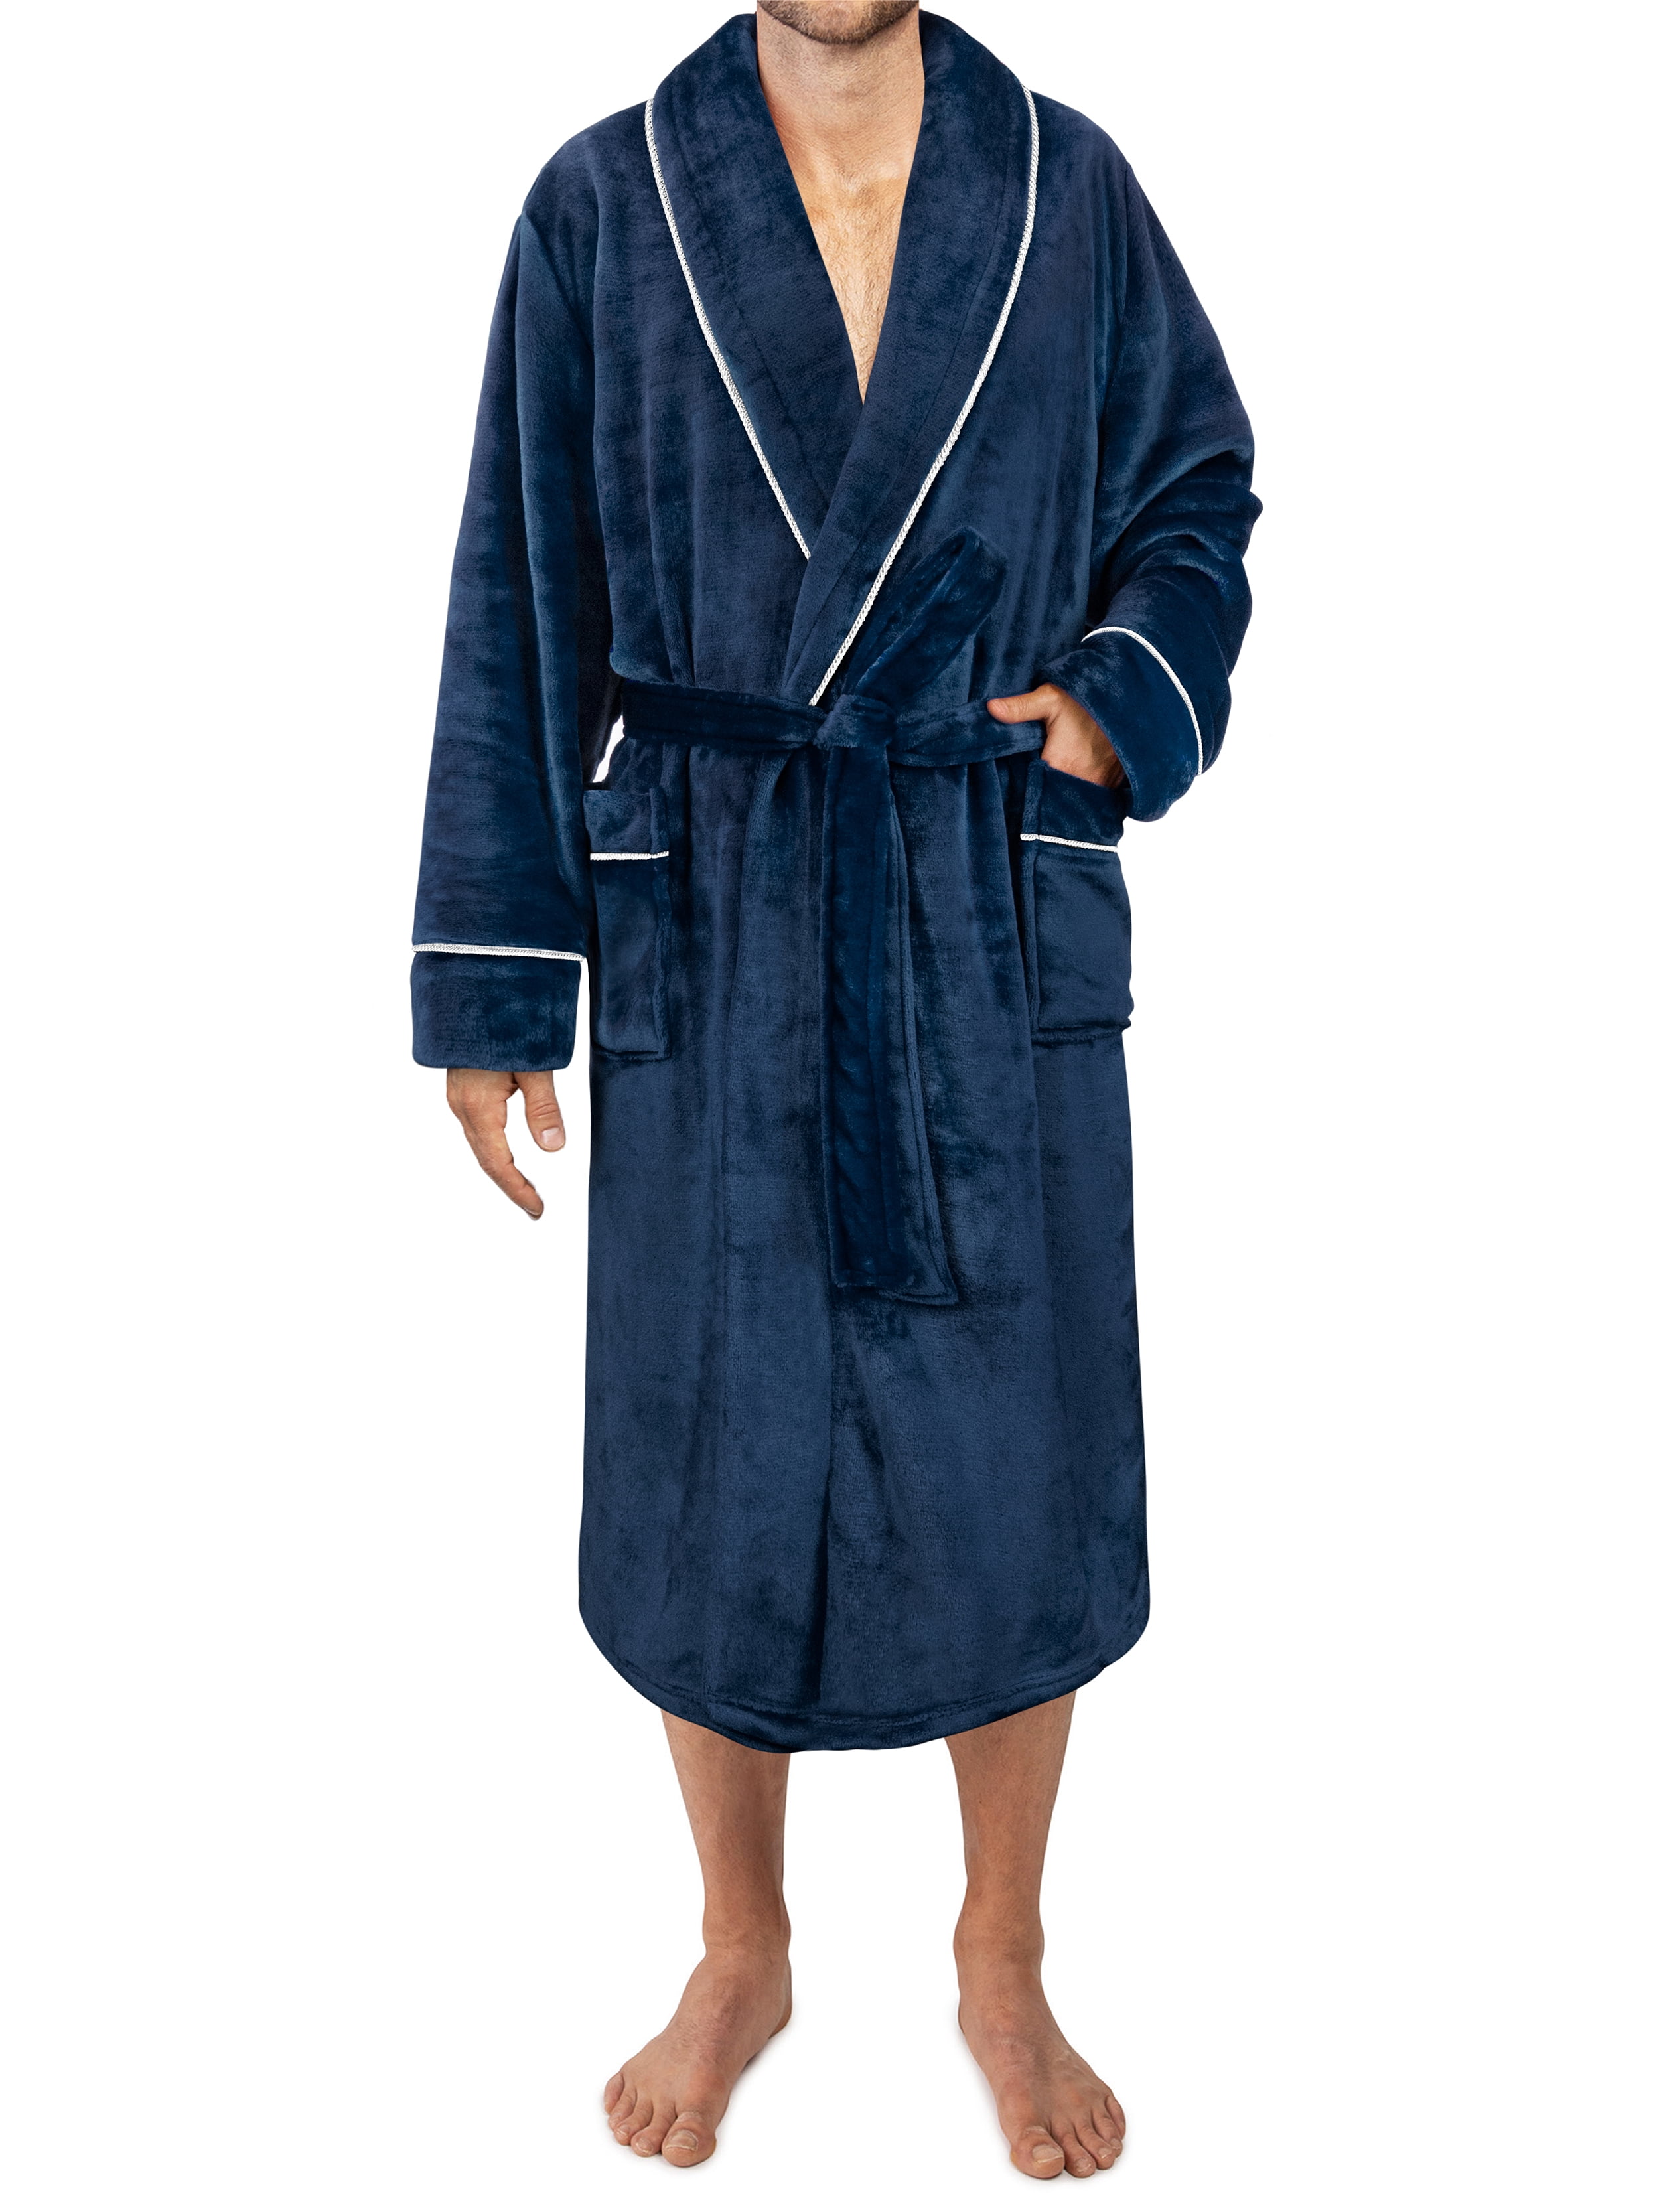 Bumplebee Mens Fleece Hooded Robe Plush Collar Shawl Bathrobe Soft Warm Long Sleeve Dressing Gown